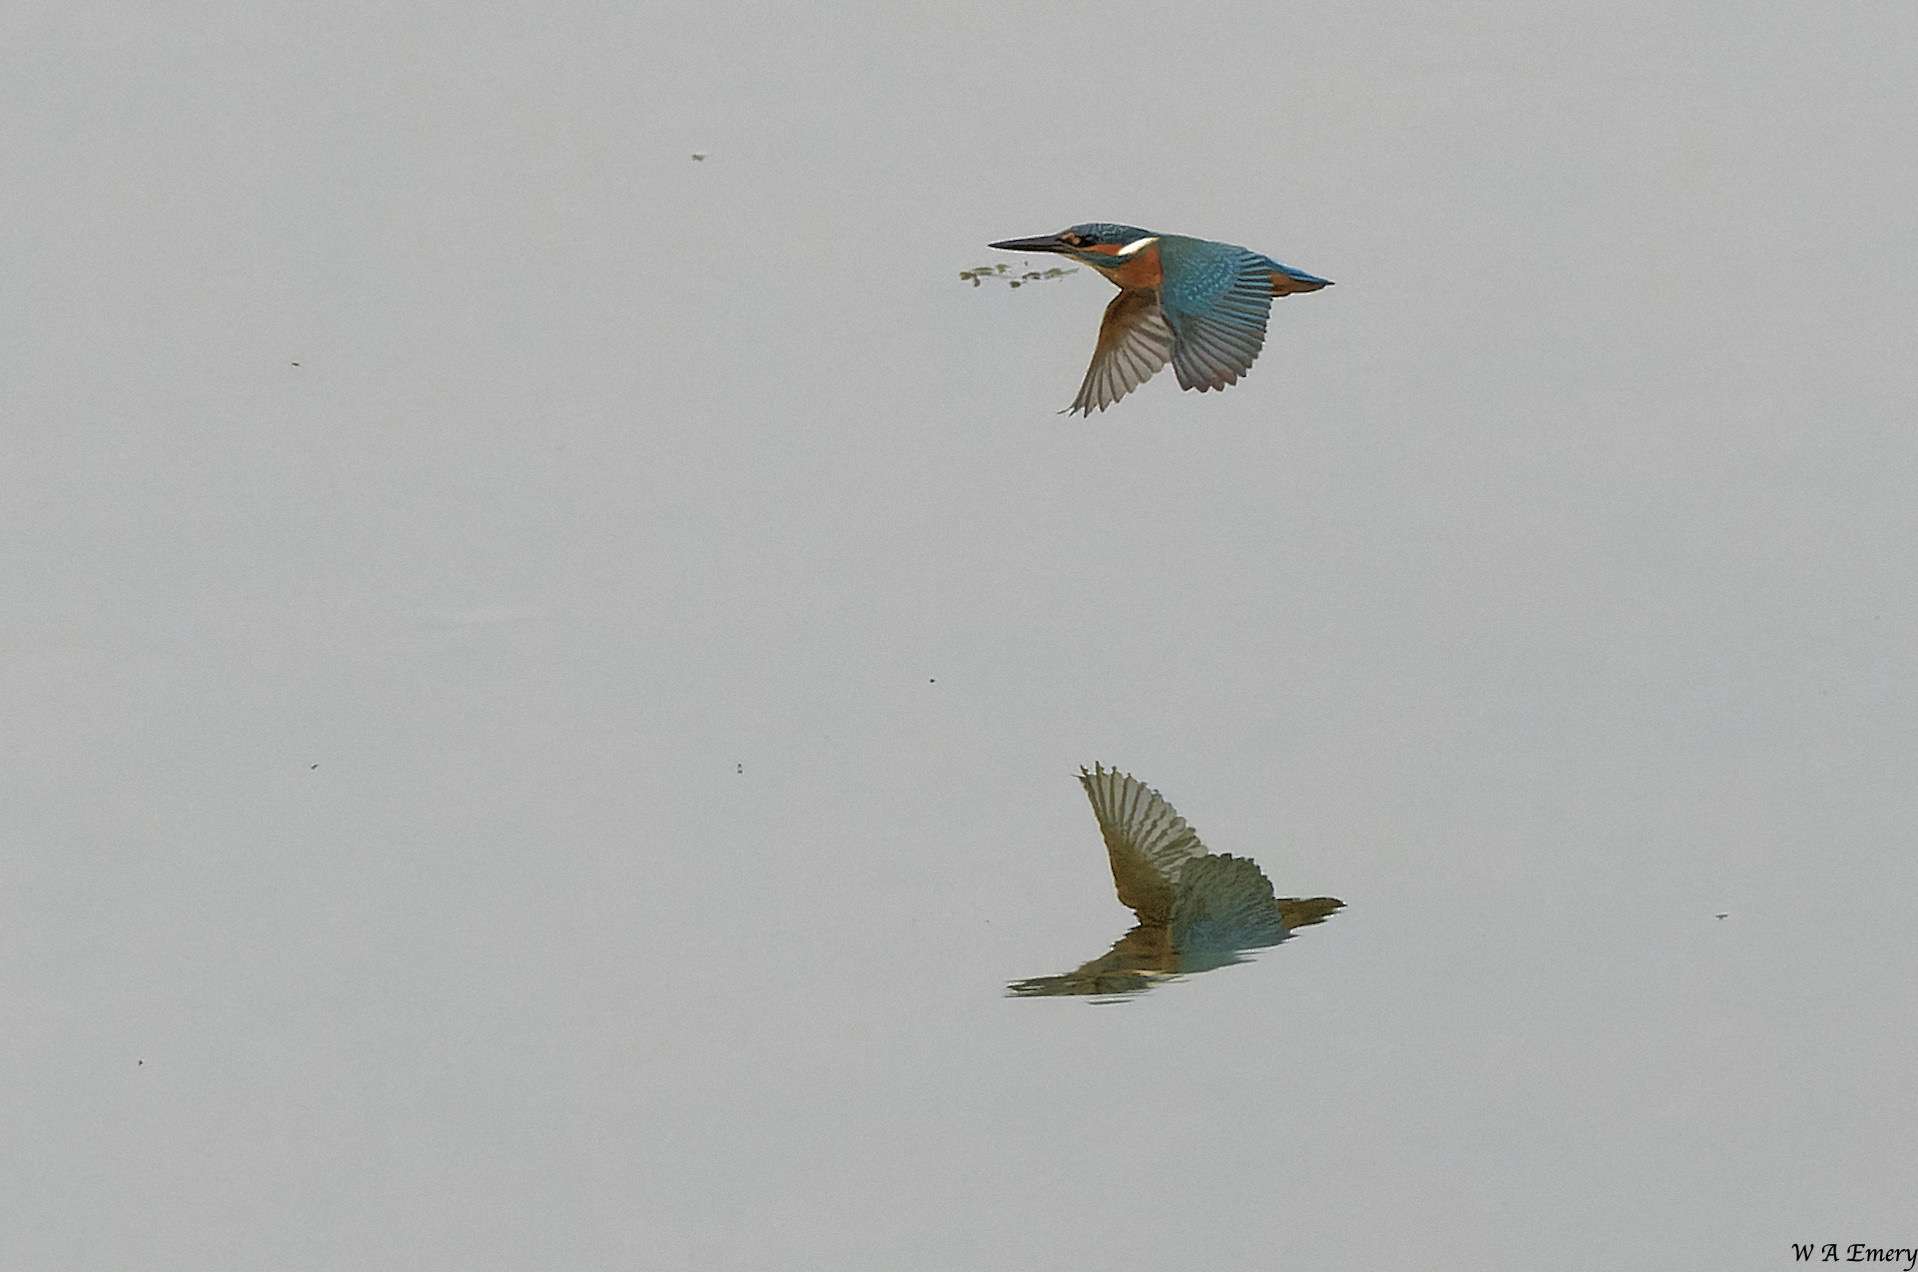 Kingfisher by Wayne Emery at Blaxton Meadow